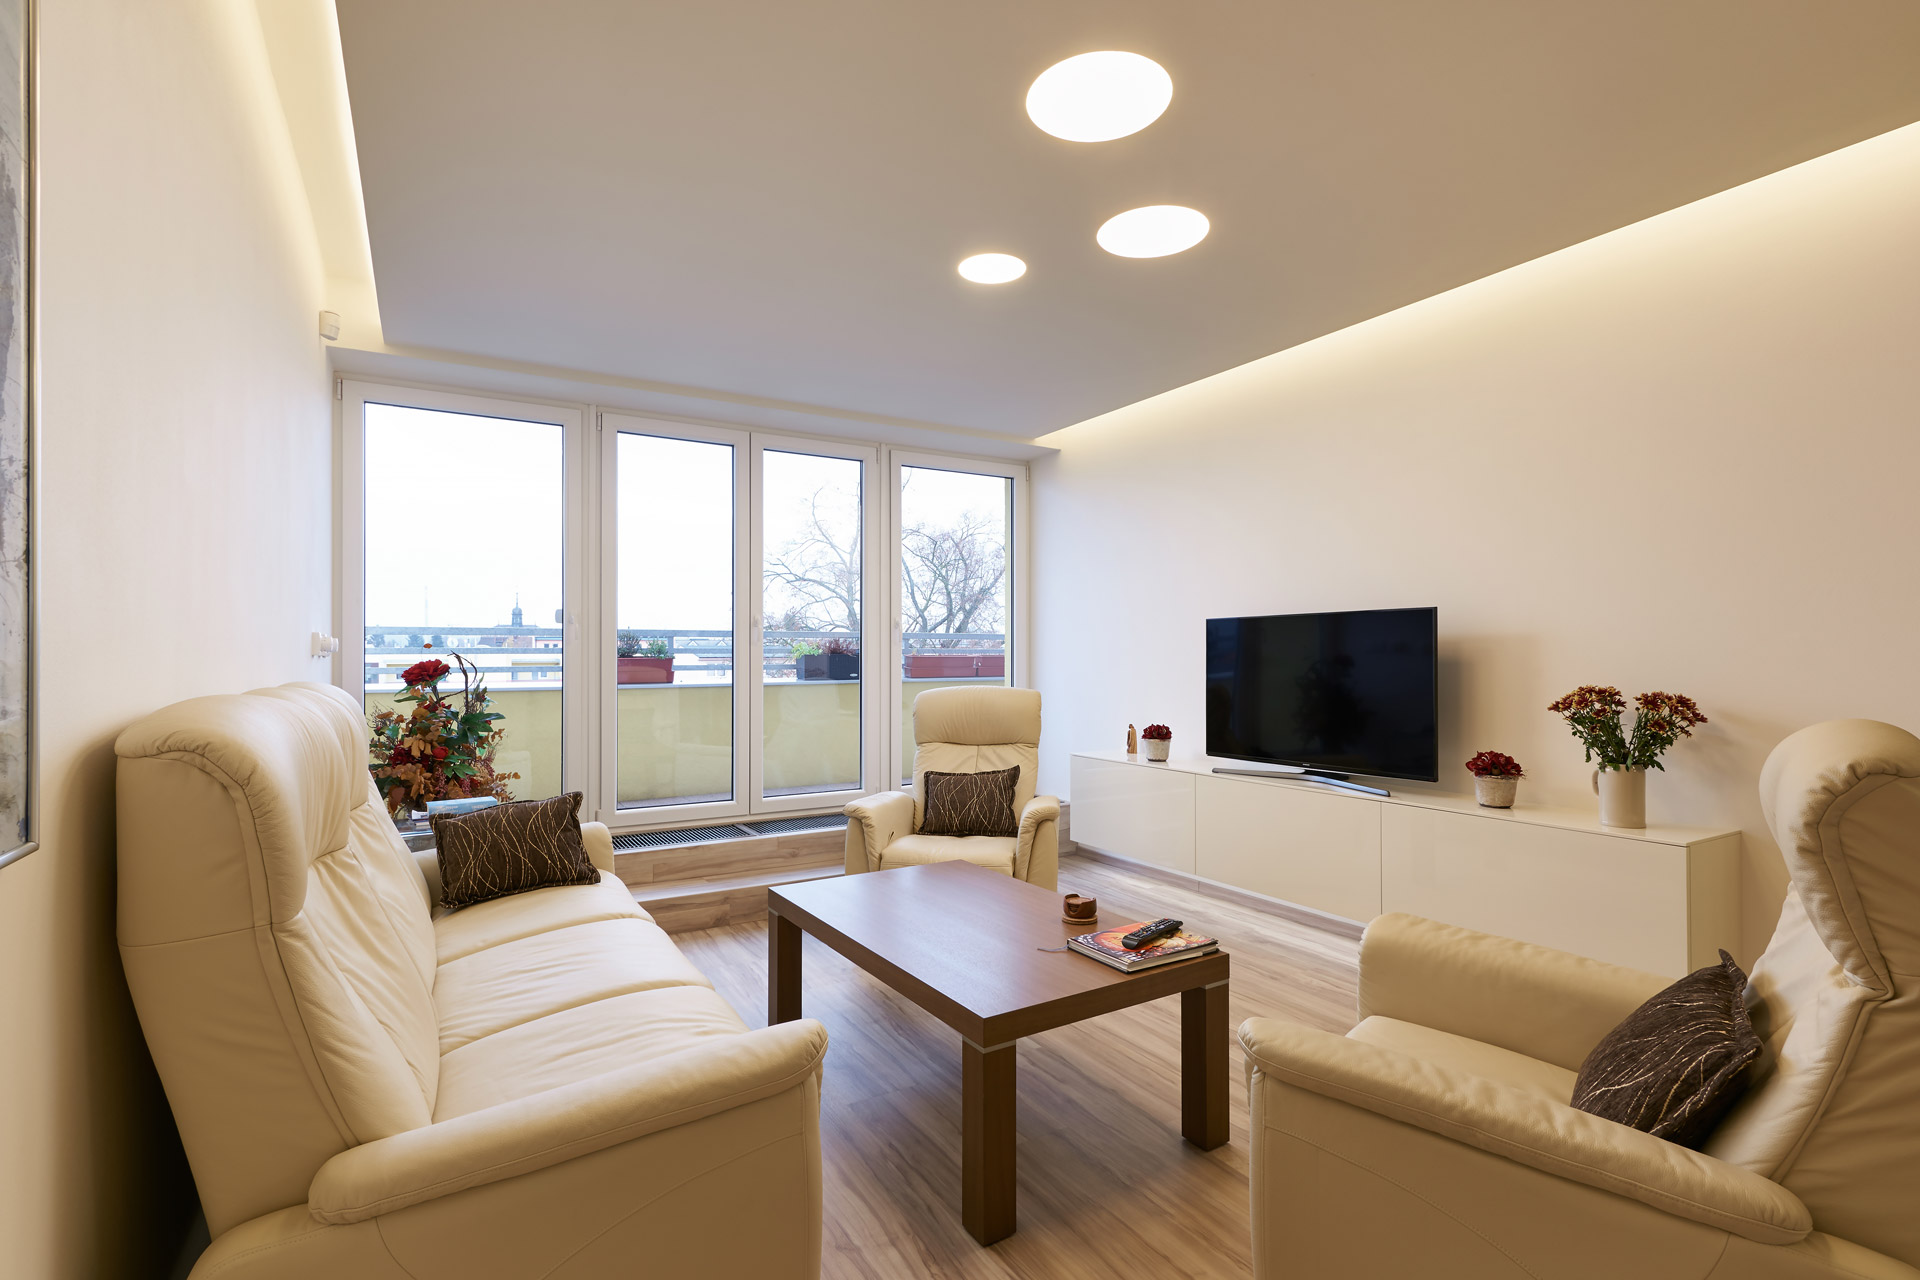 Hanák Furniture Apartment Interior Realization